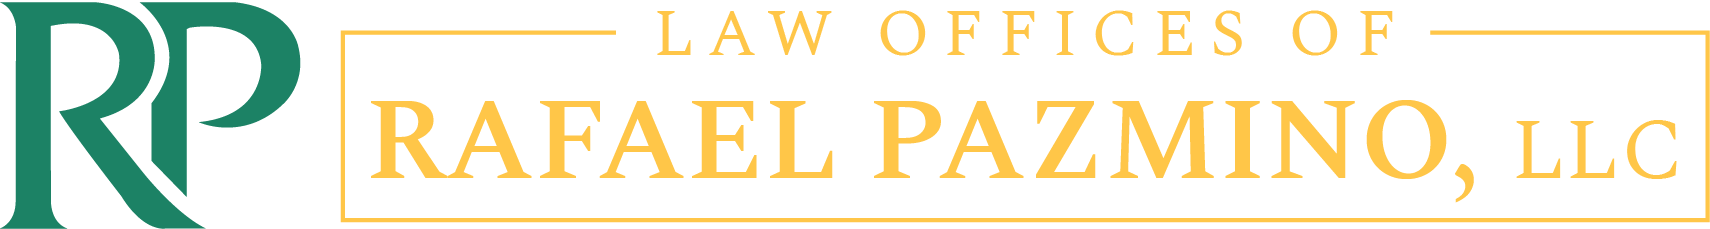 Law Offices of Rafael Pazmino, LLC